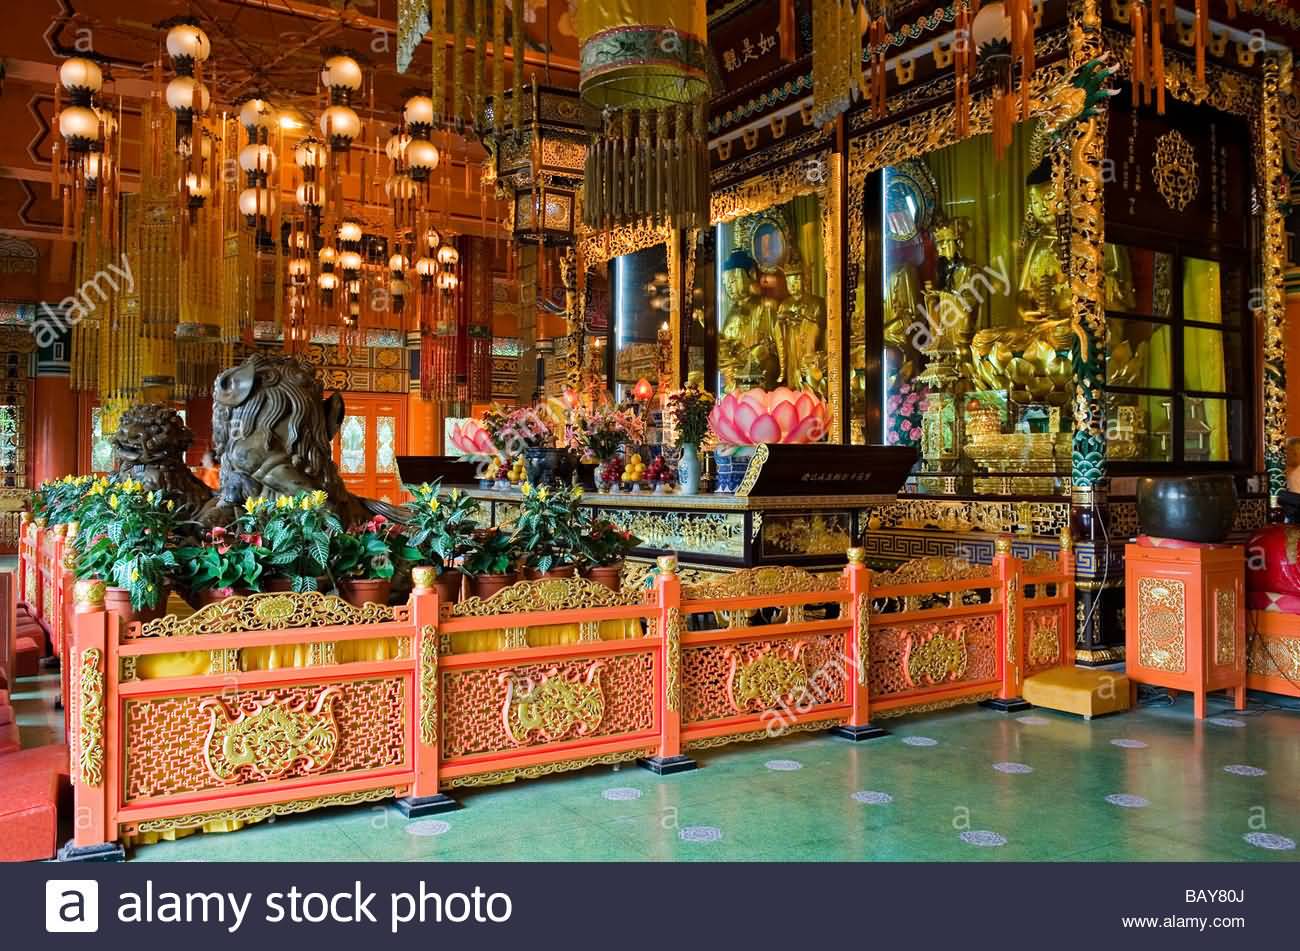 The Main Altar Inside The Hall Of Great Hero Of Po Lin Monastery